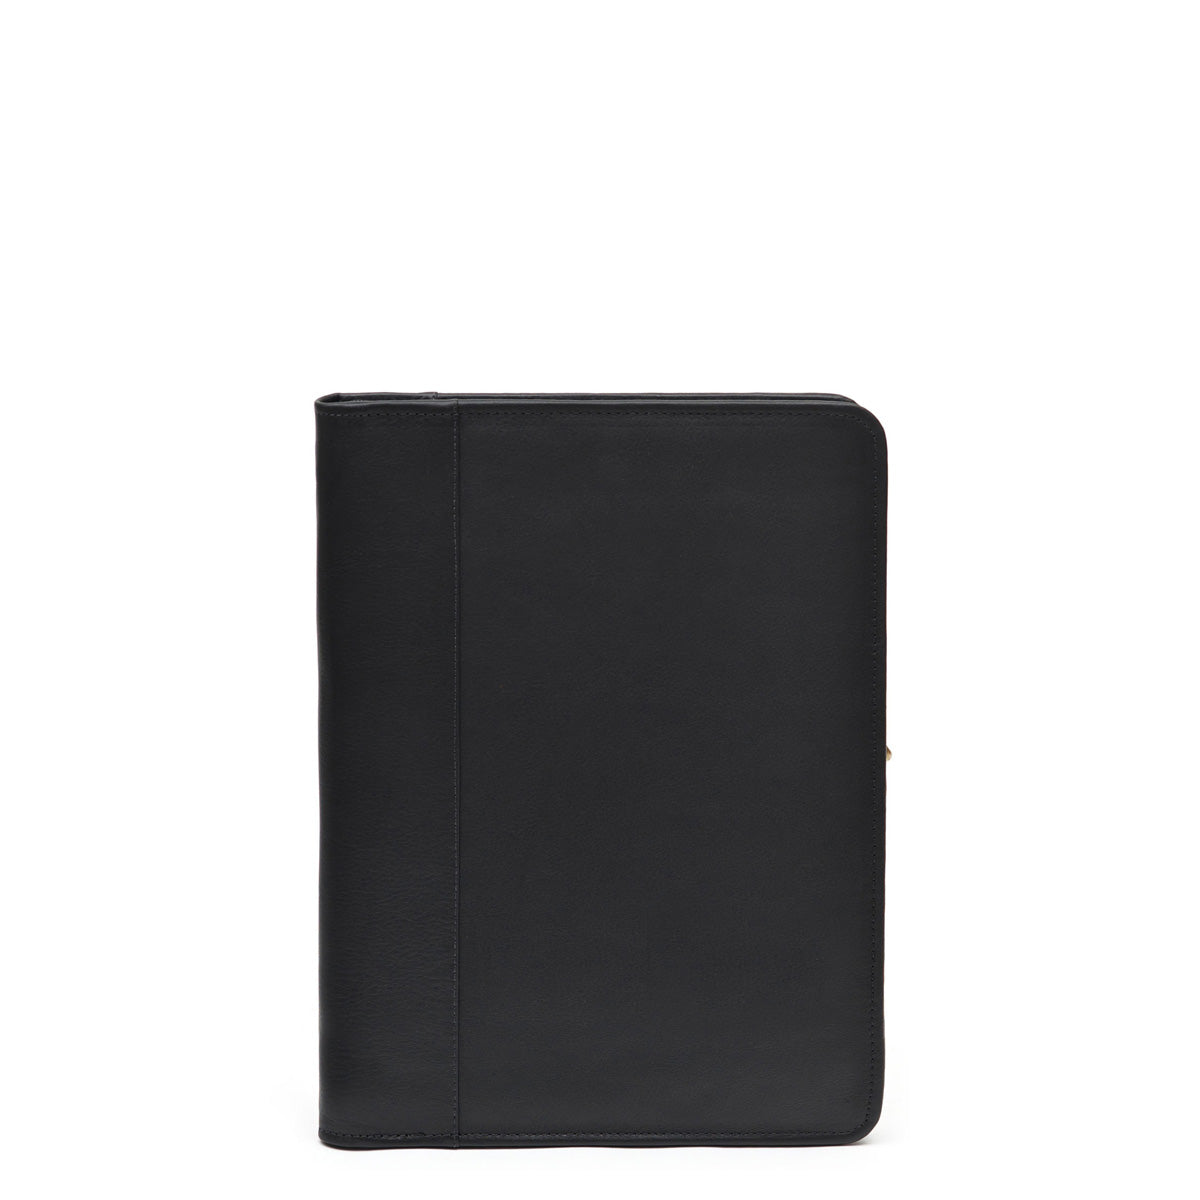 Hunt A4 Compendium with Tablet Pocket - Black